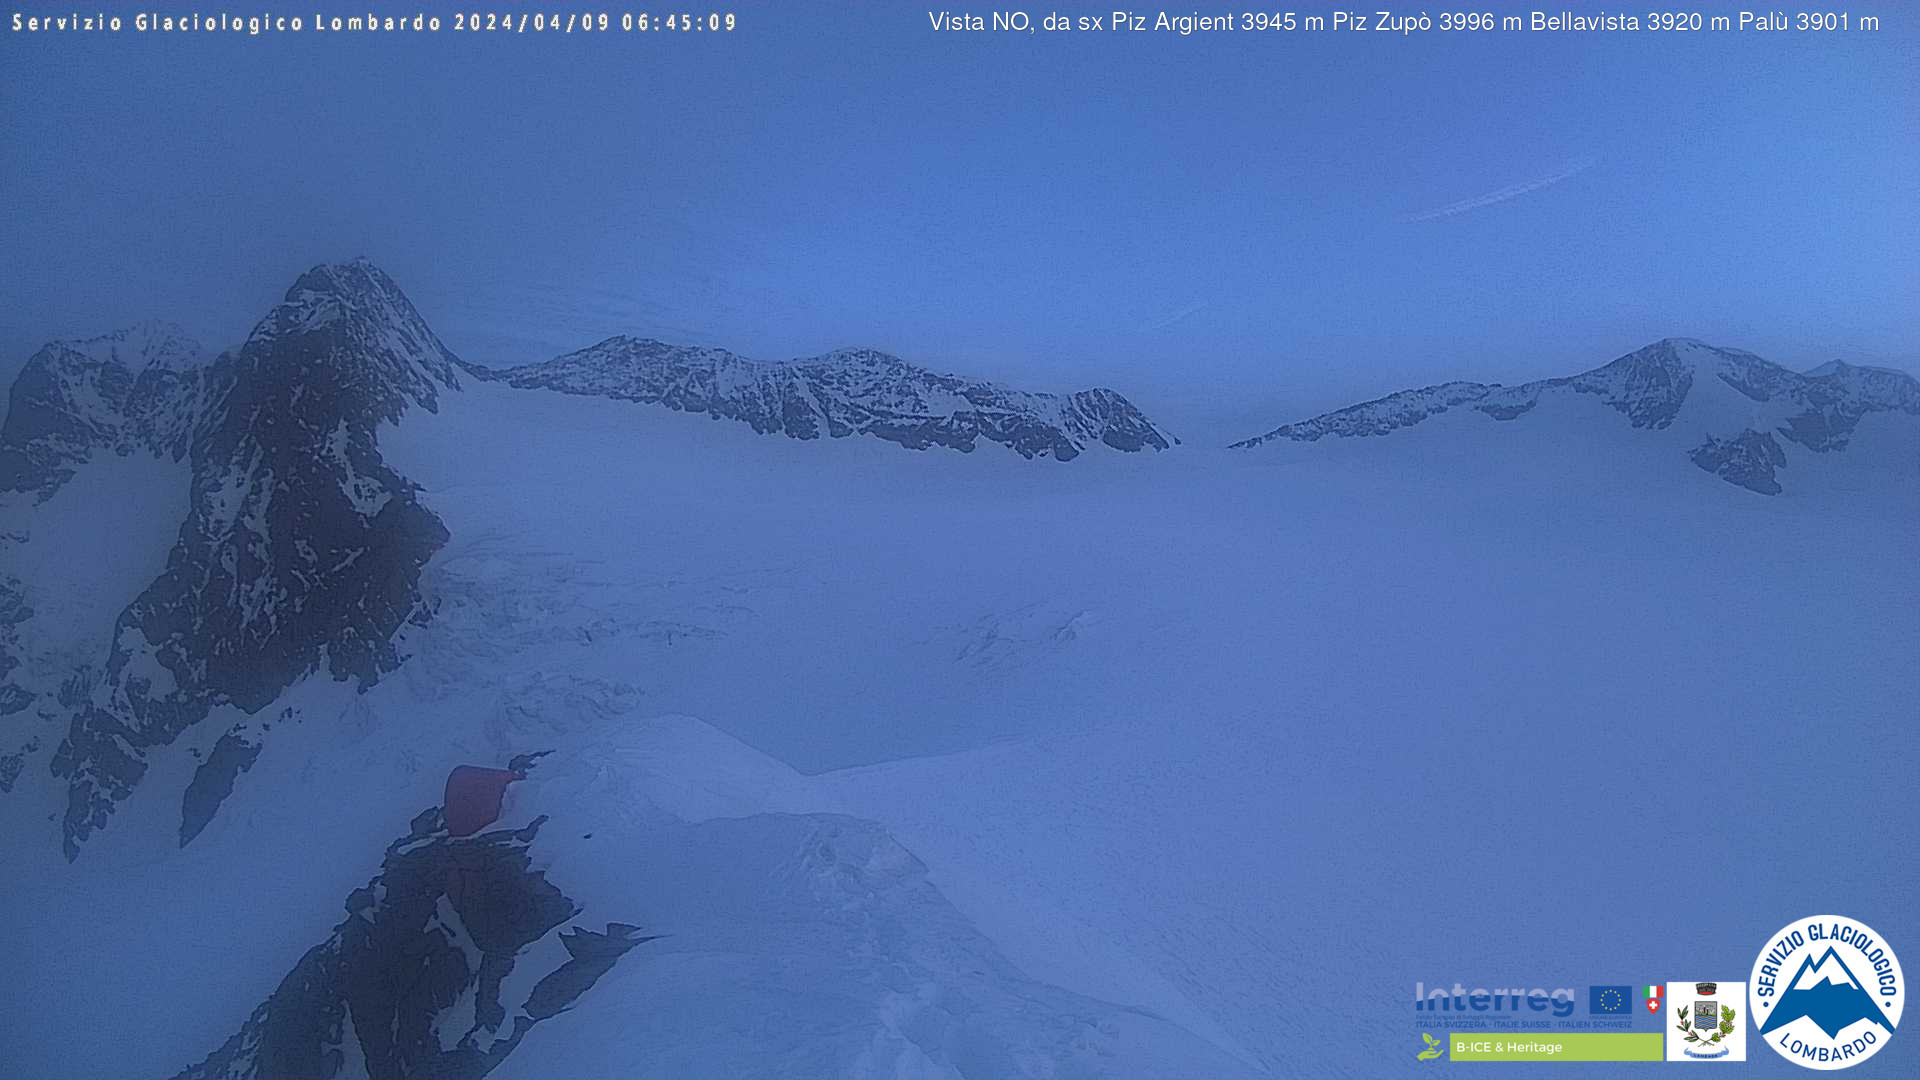 time-lapse frame, Altopiano Fellaria Palù 3560 m nord webcam